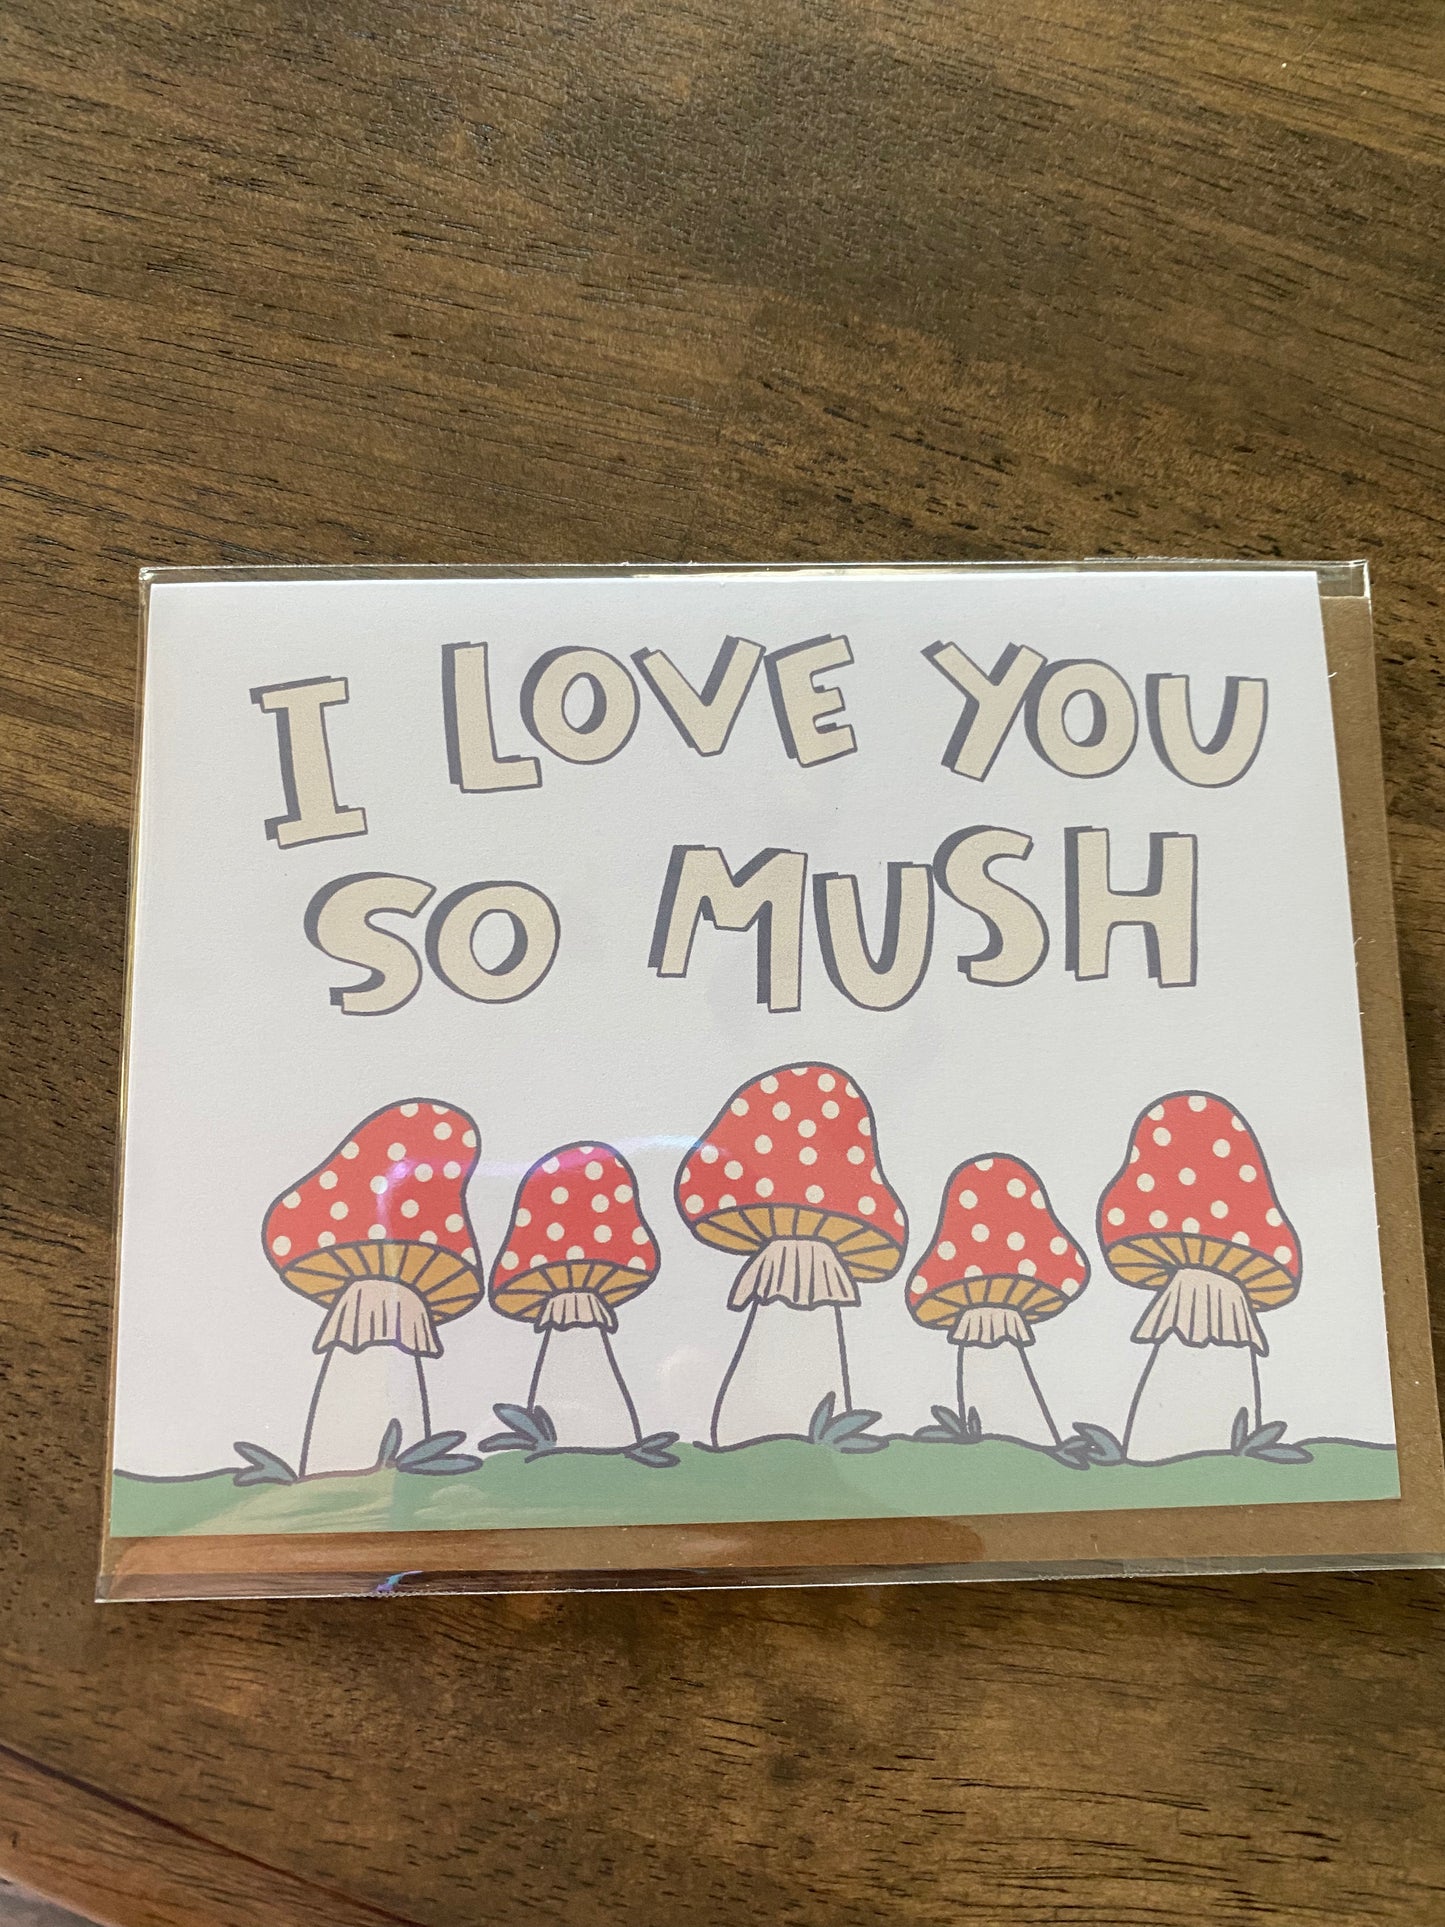 Mushroom cards